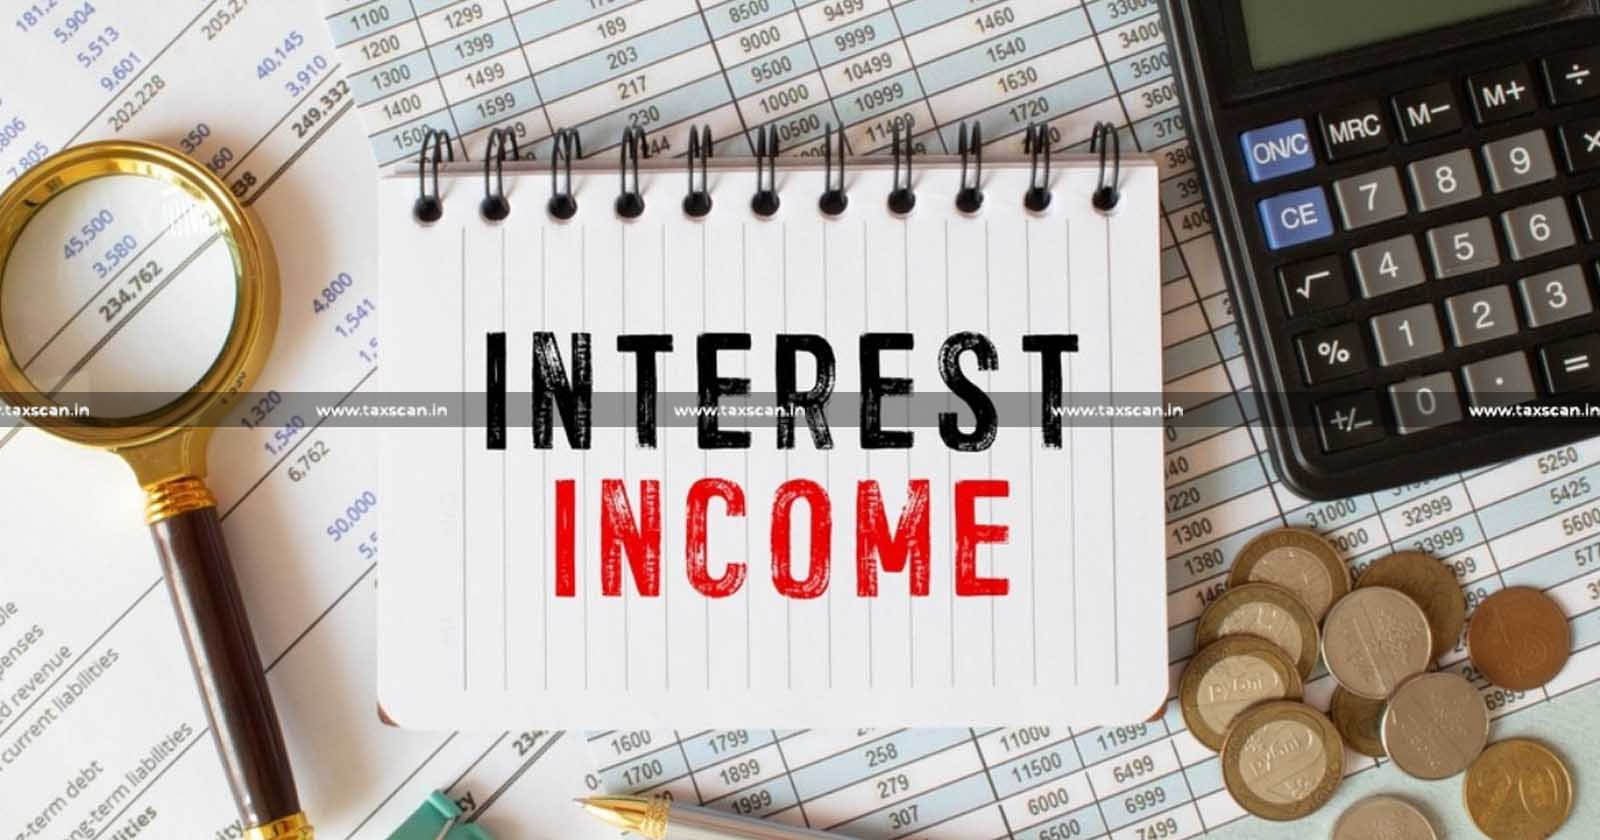 Deduction - Interest - Income - Co-operative Bank - ITAT - income tax -taxscan